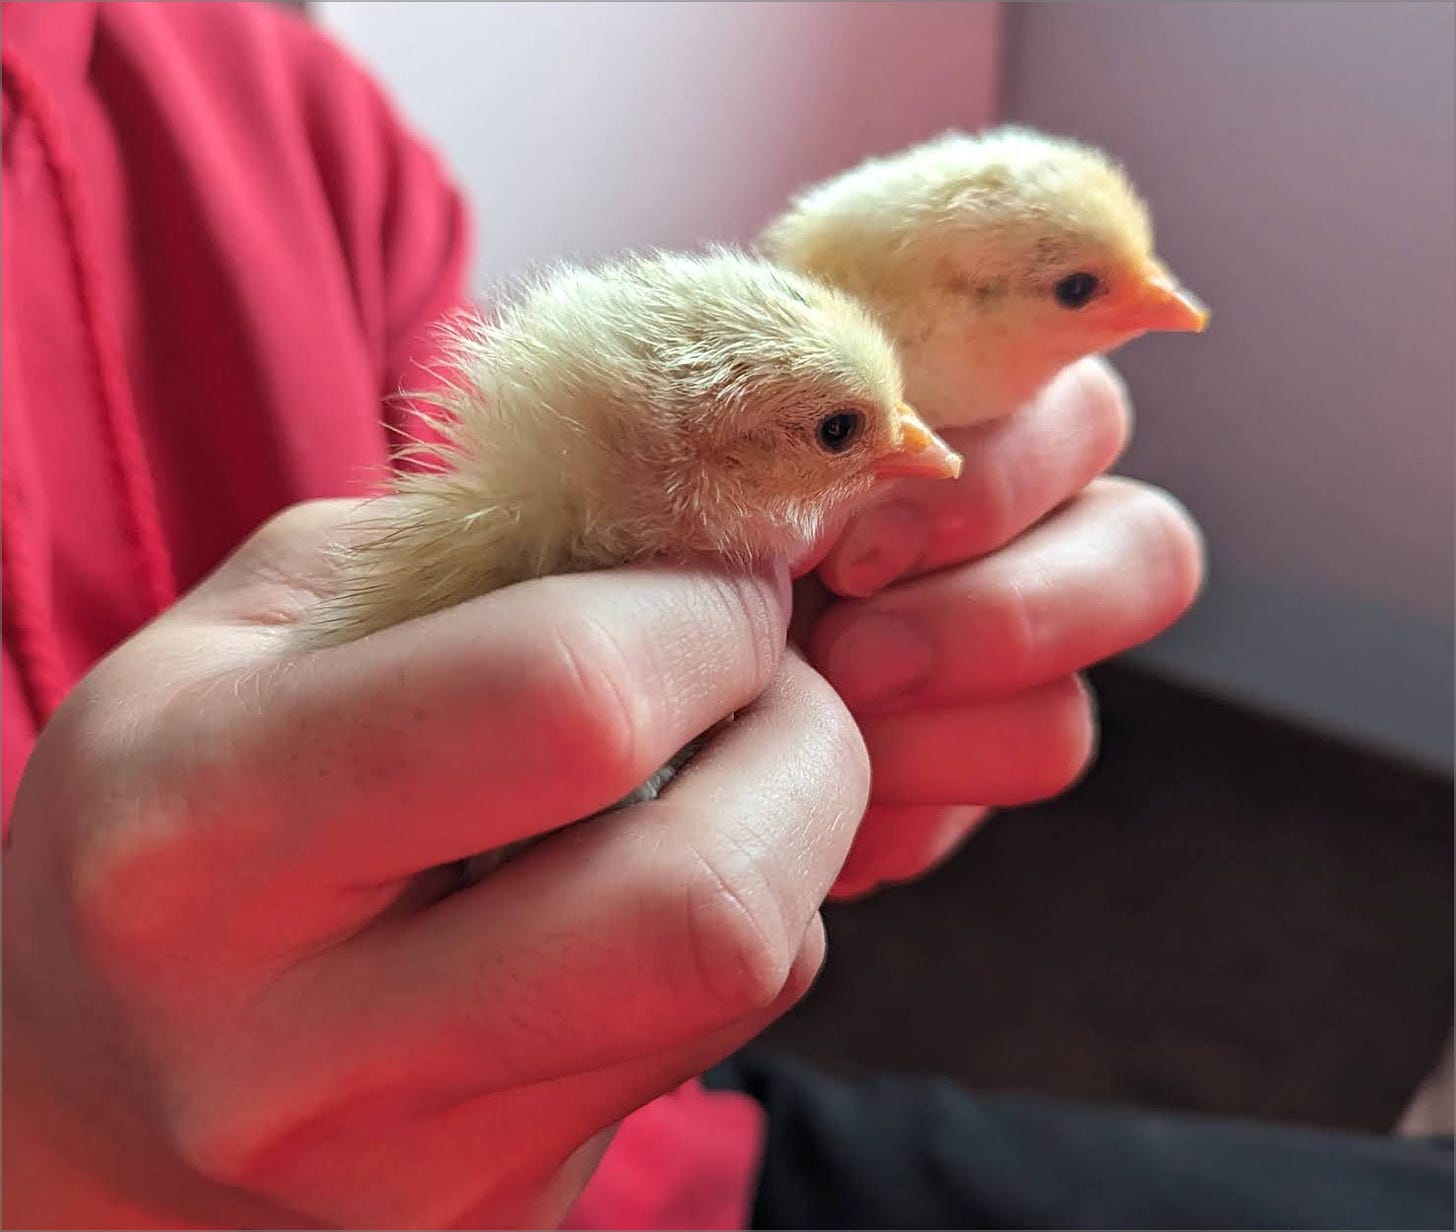 Man holding two small newborn chicks